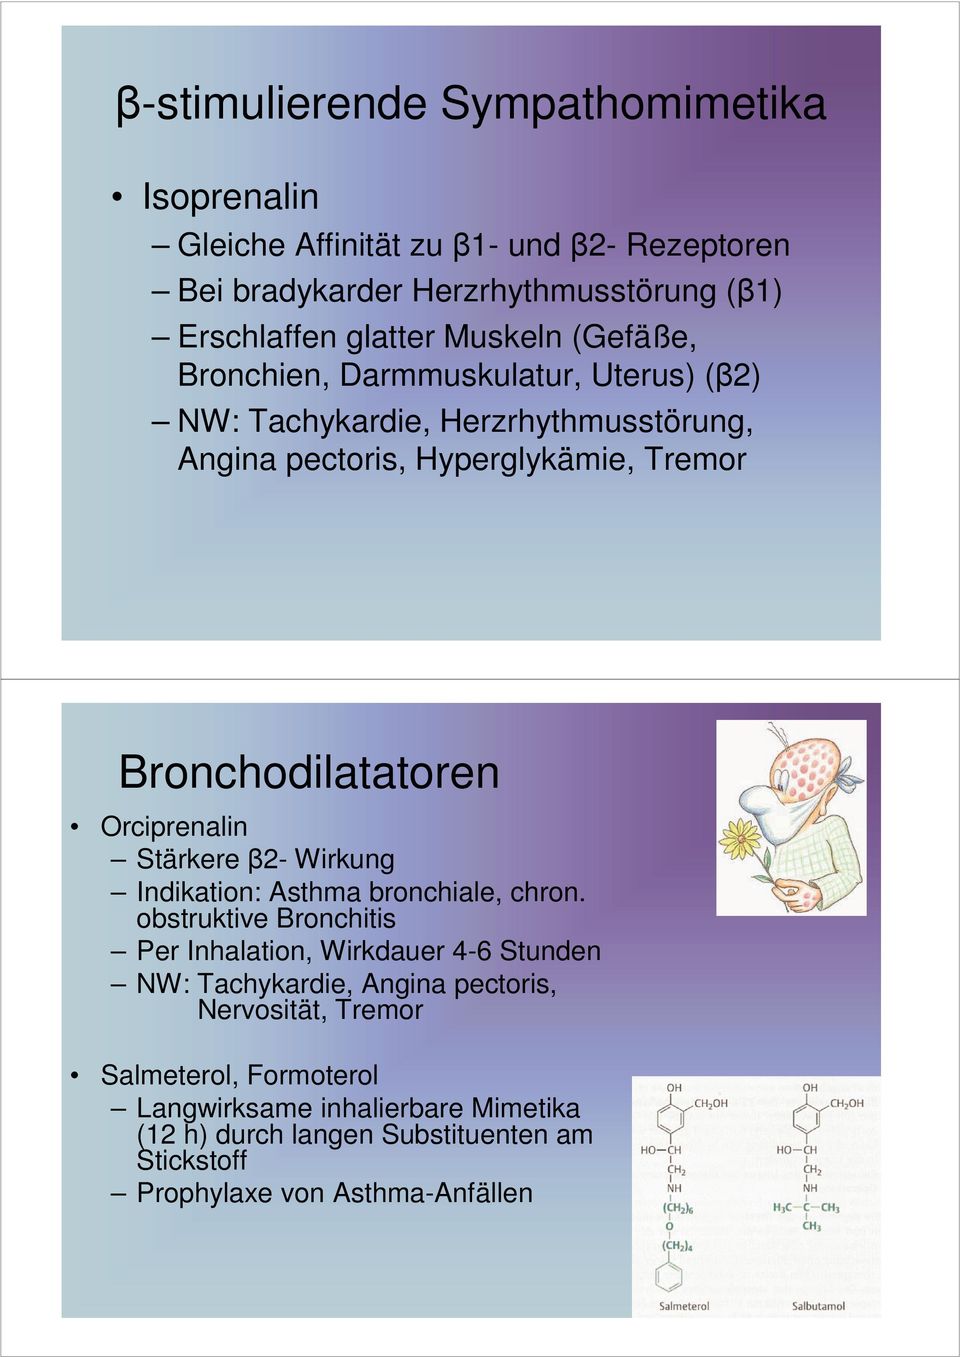 Orciprenalin Stärkere 2- Wirkung Indikation: Asthma bronchiale, chron.